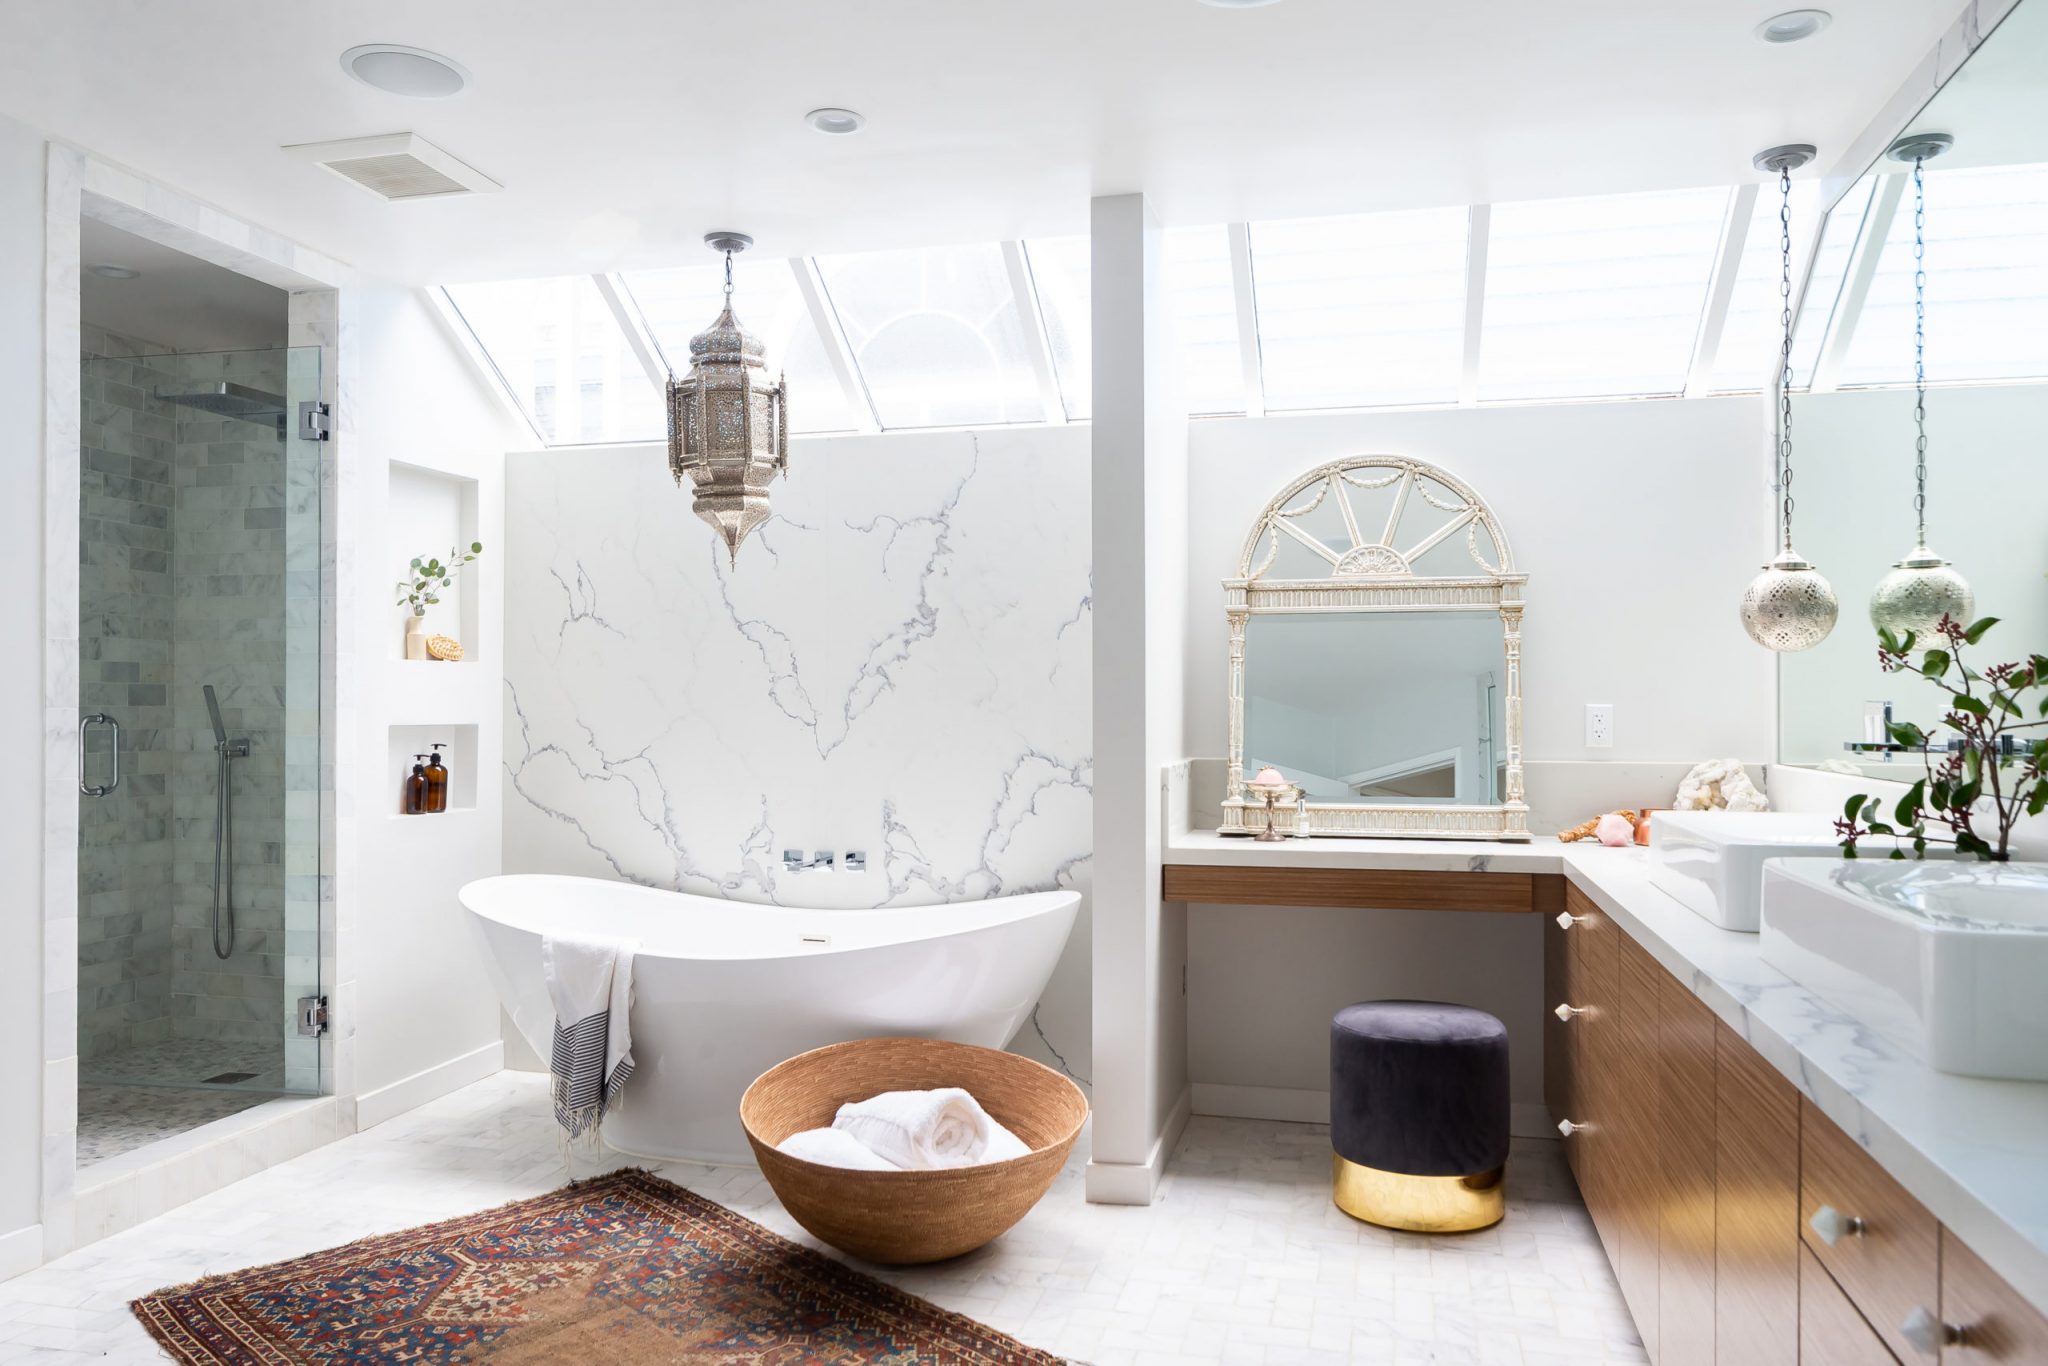 15 Best Small Bathroom Design Ideas To